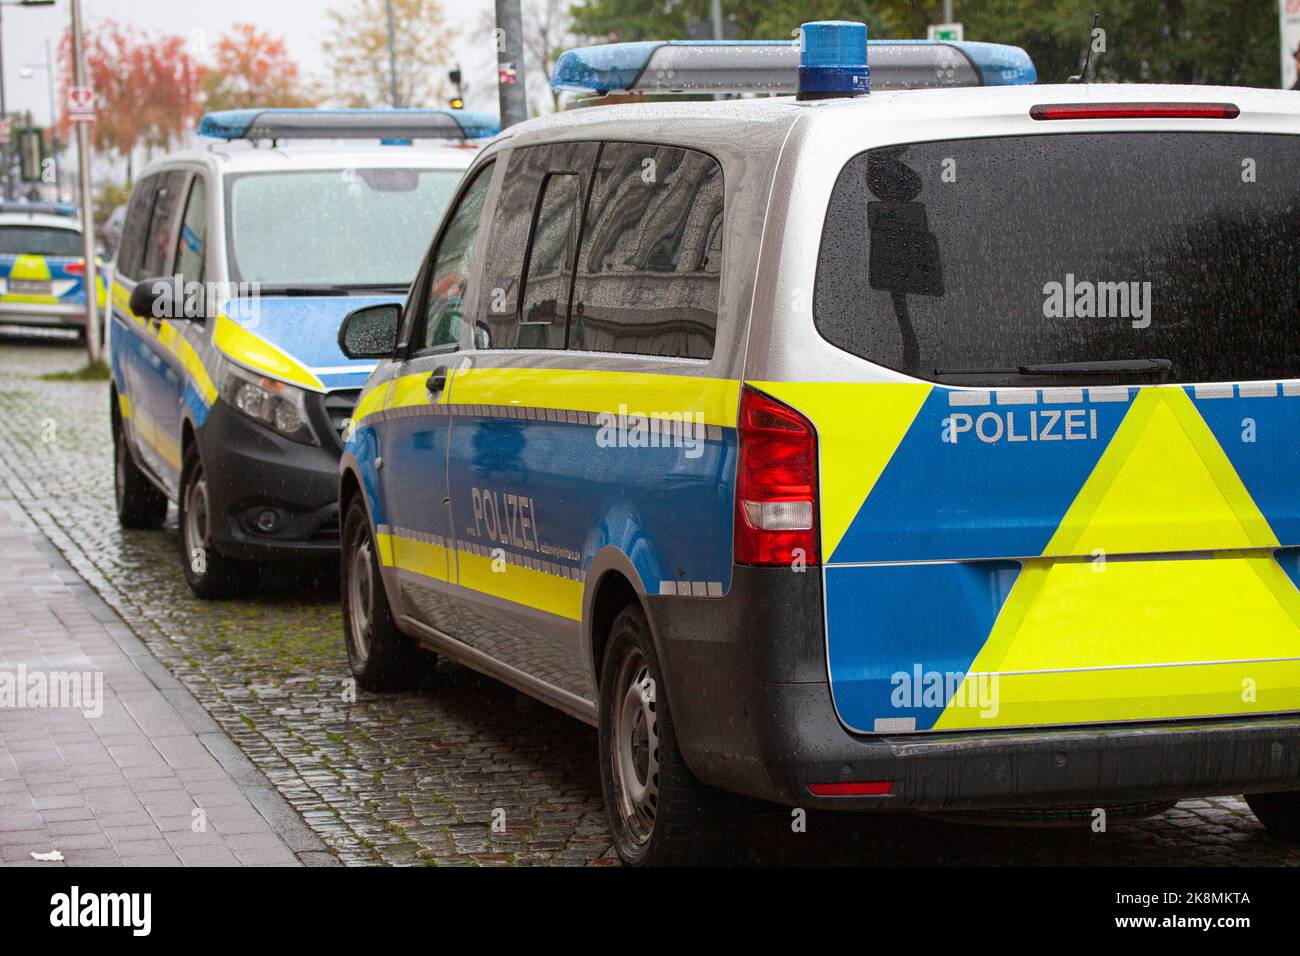 Voitures de police allemandes garées dans la rue. Flensburg, Allemagne Banque D'Images